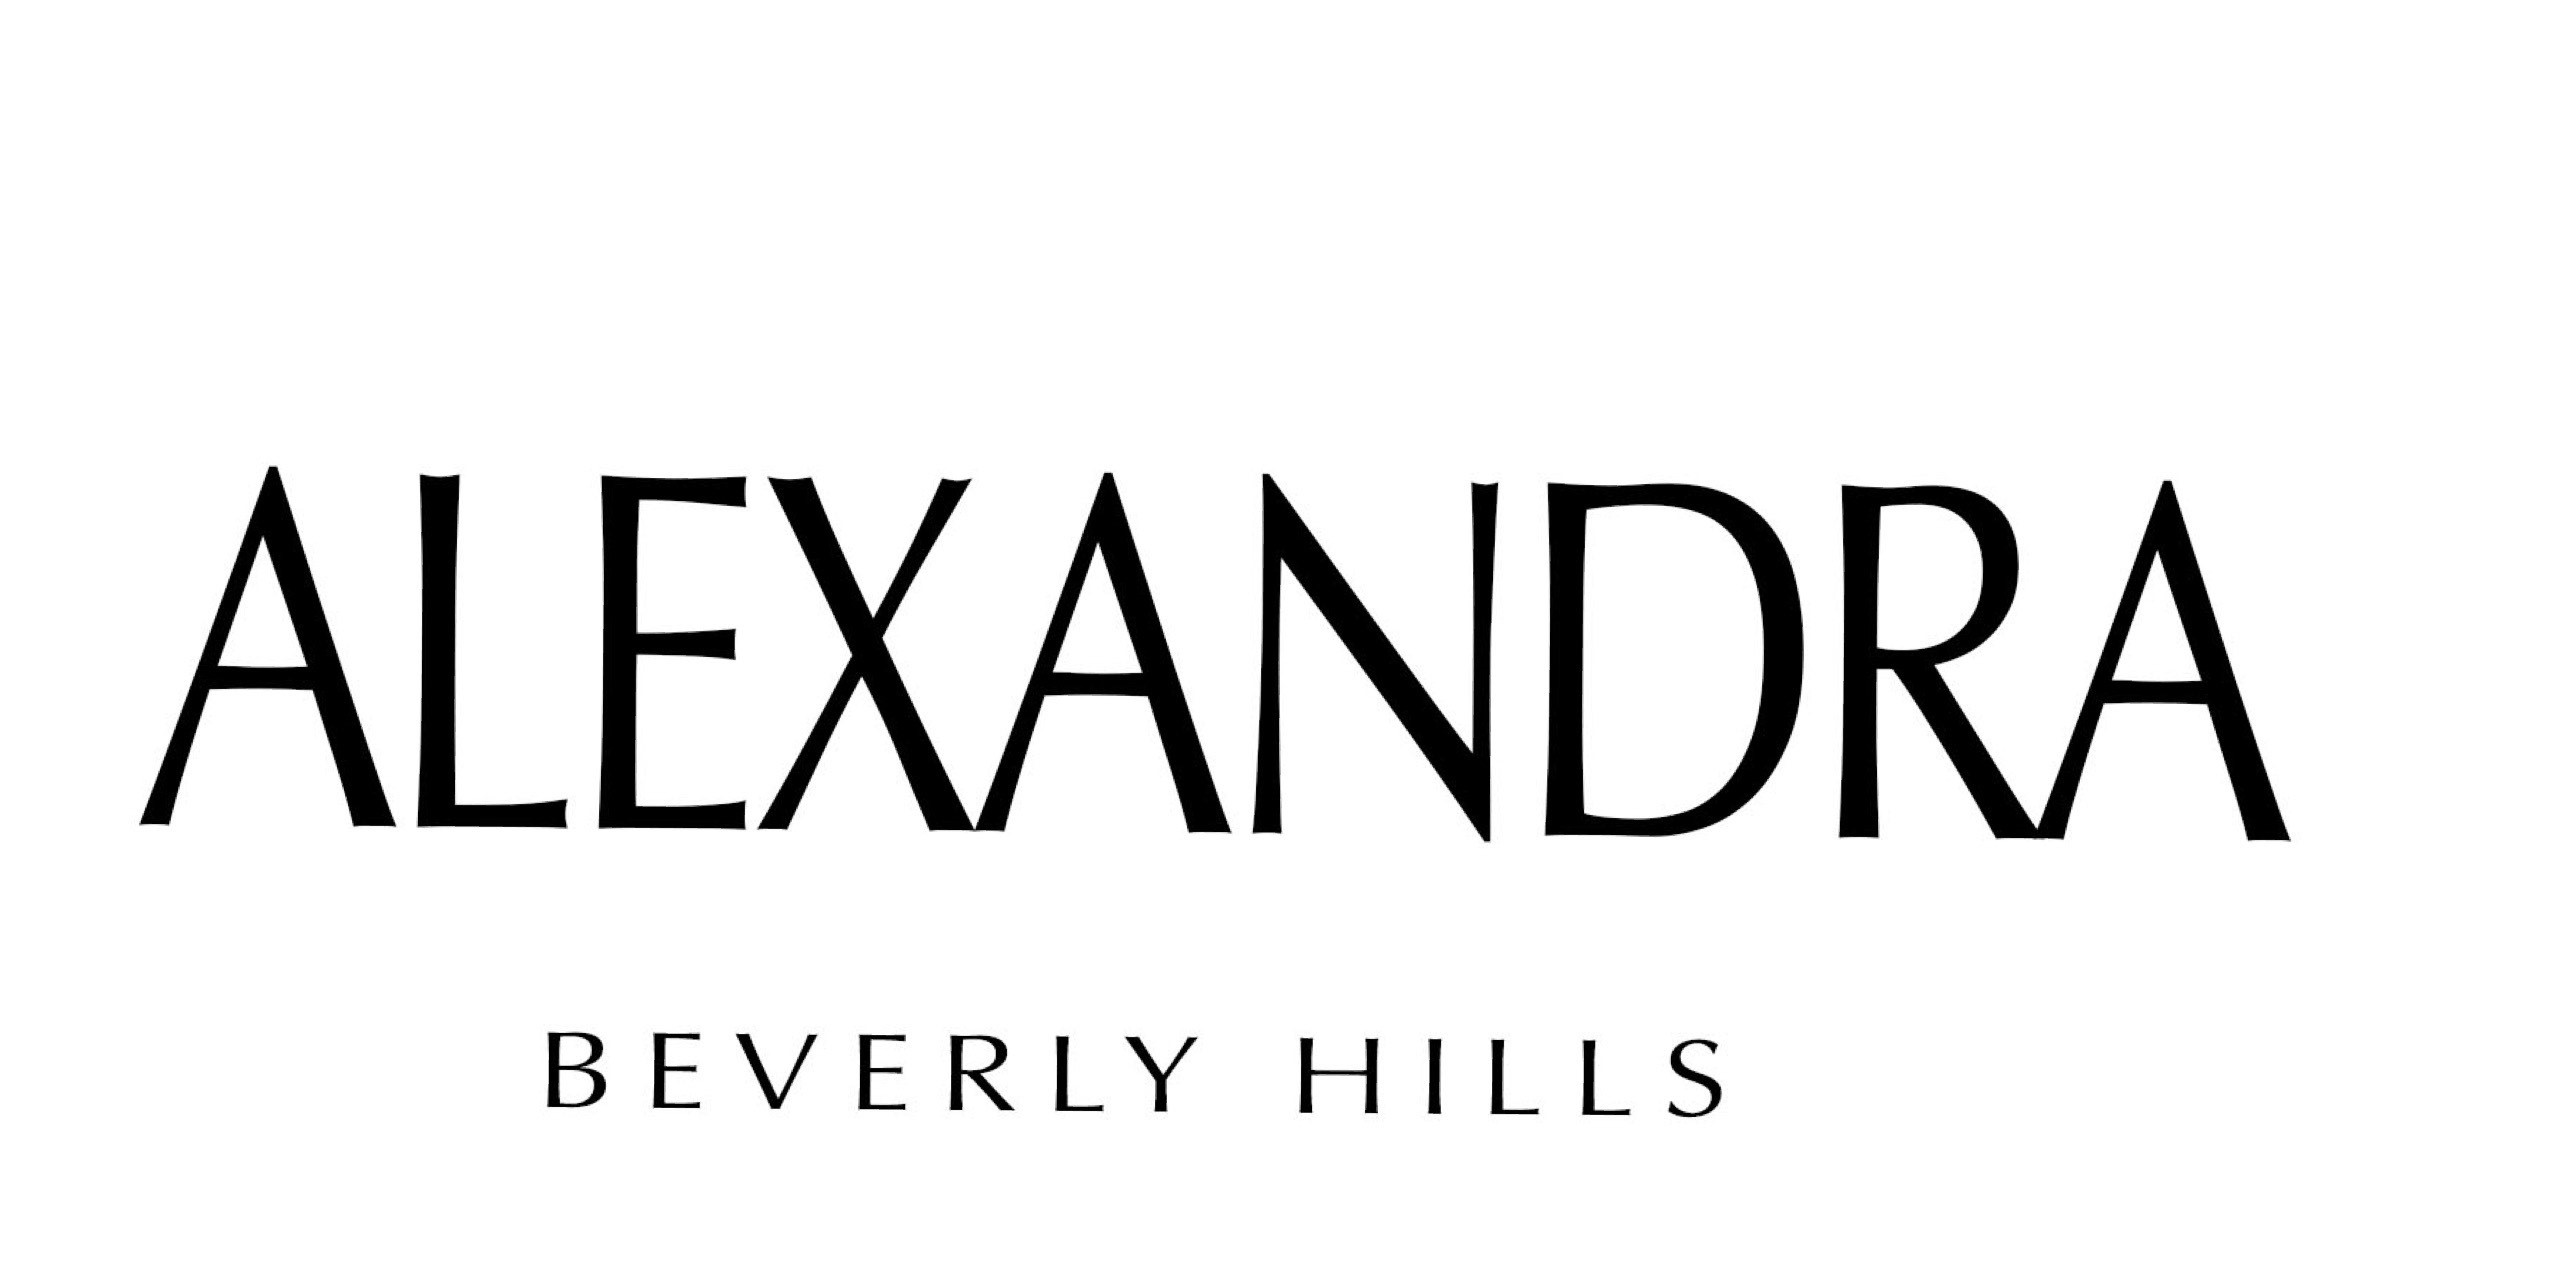 Beverly Center  LA's Premier Food, Fashion, and Shopping Destination